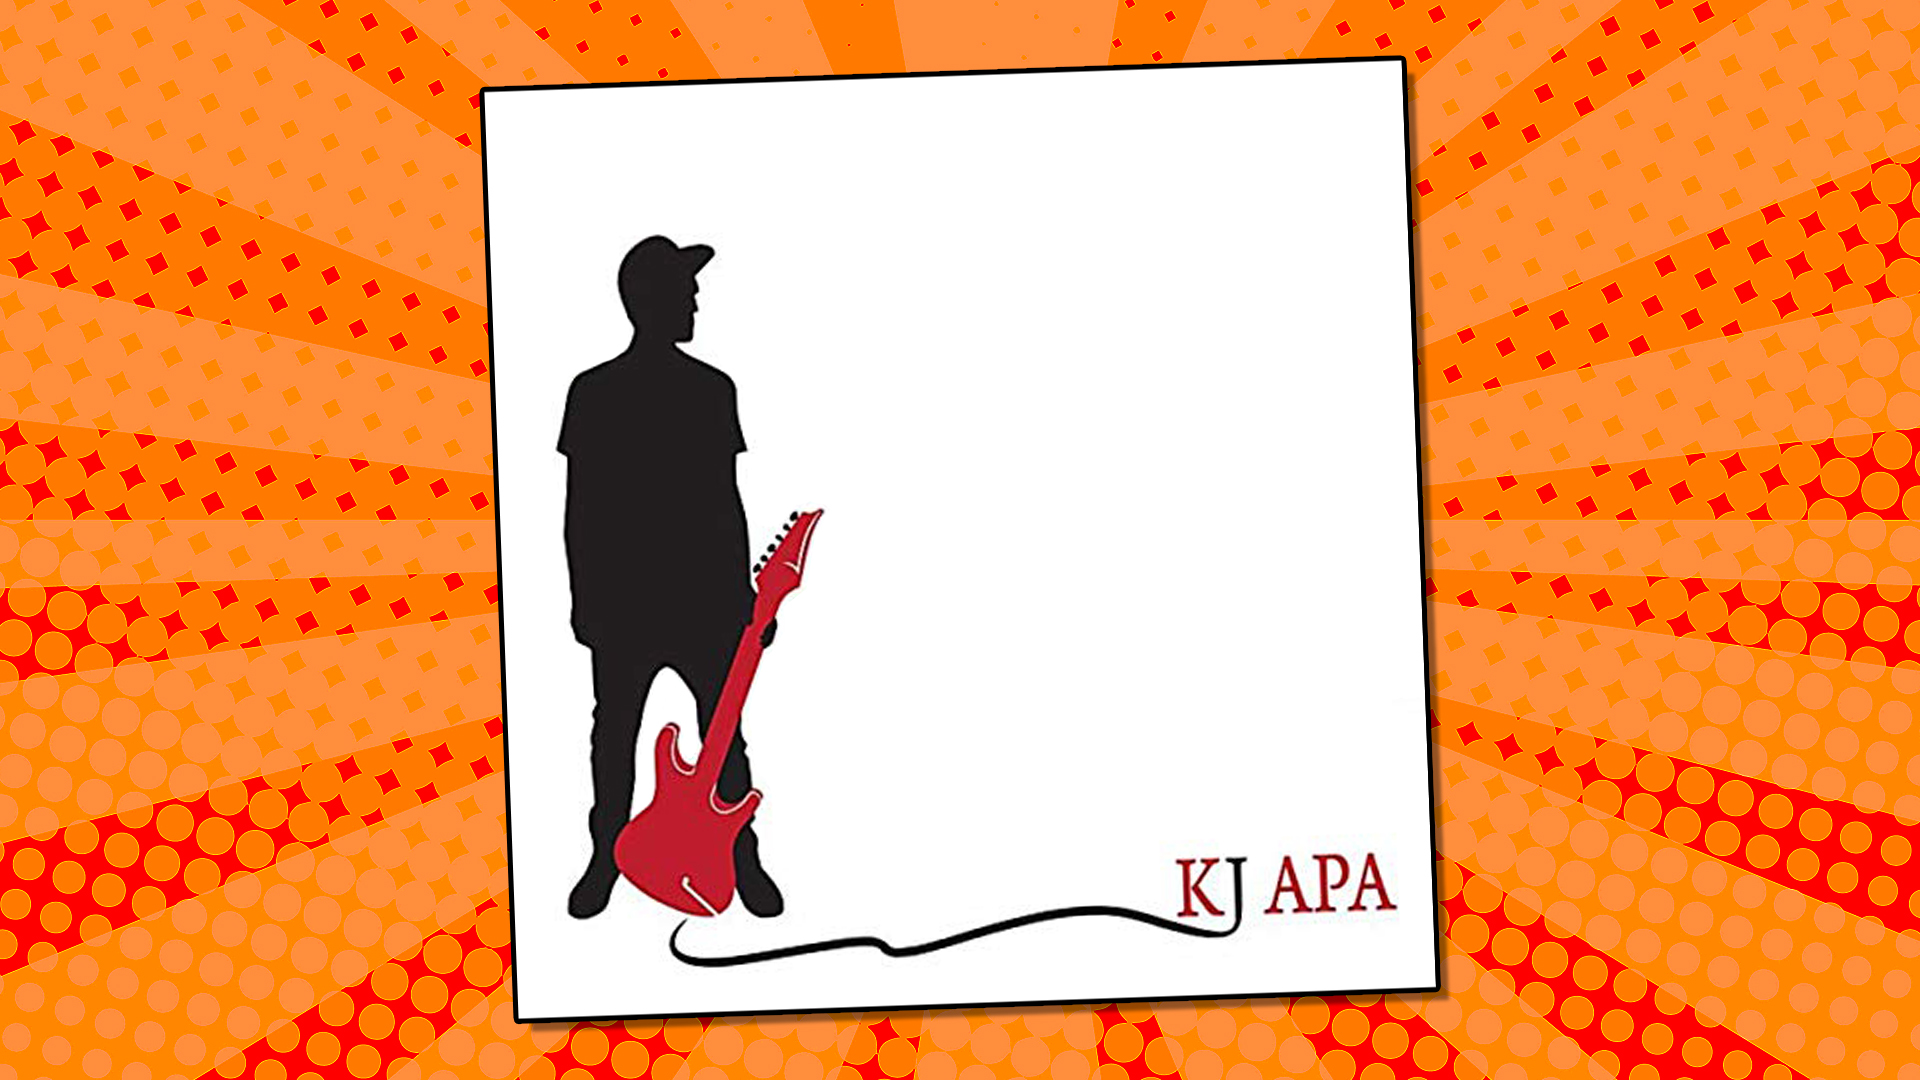 KJ Apa's debut album 